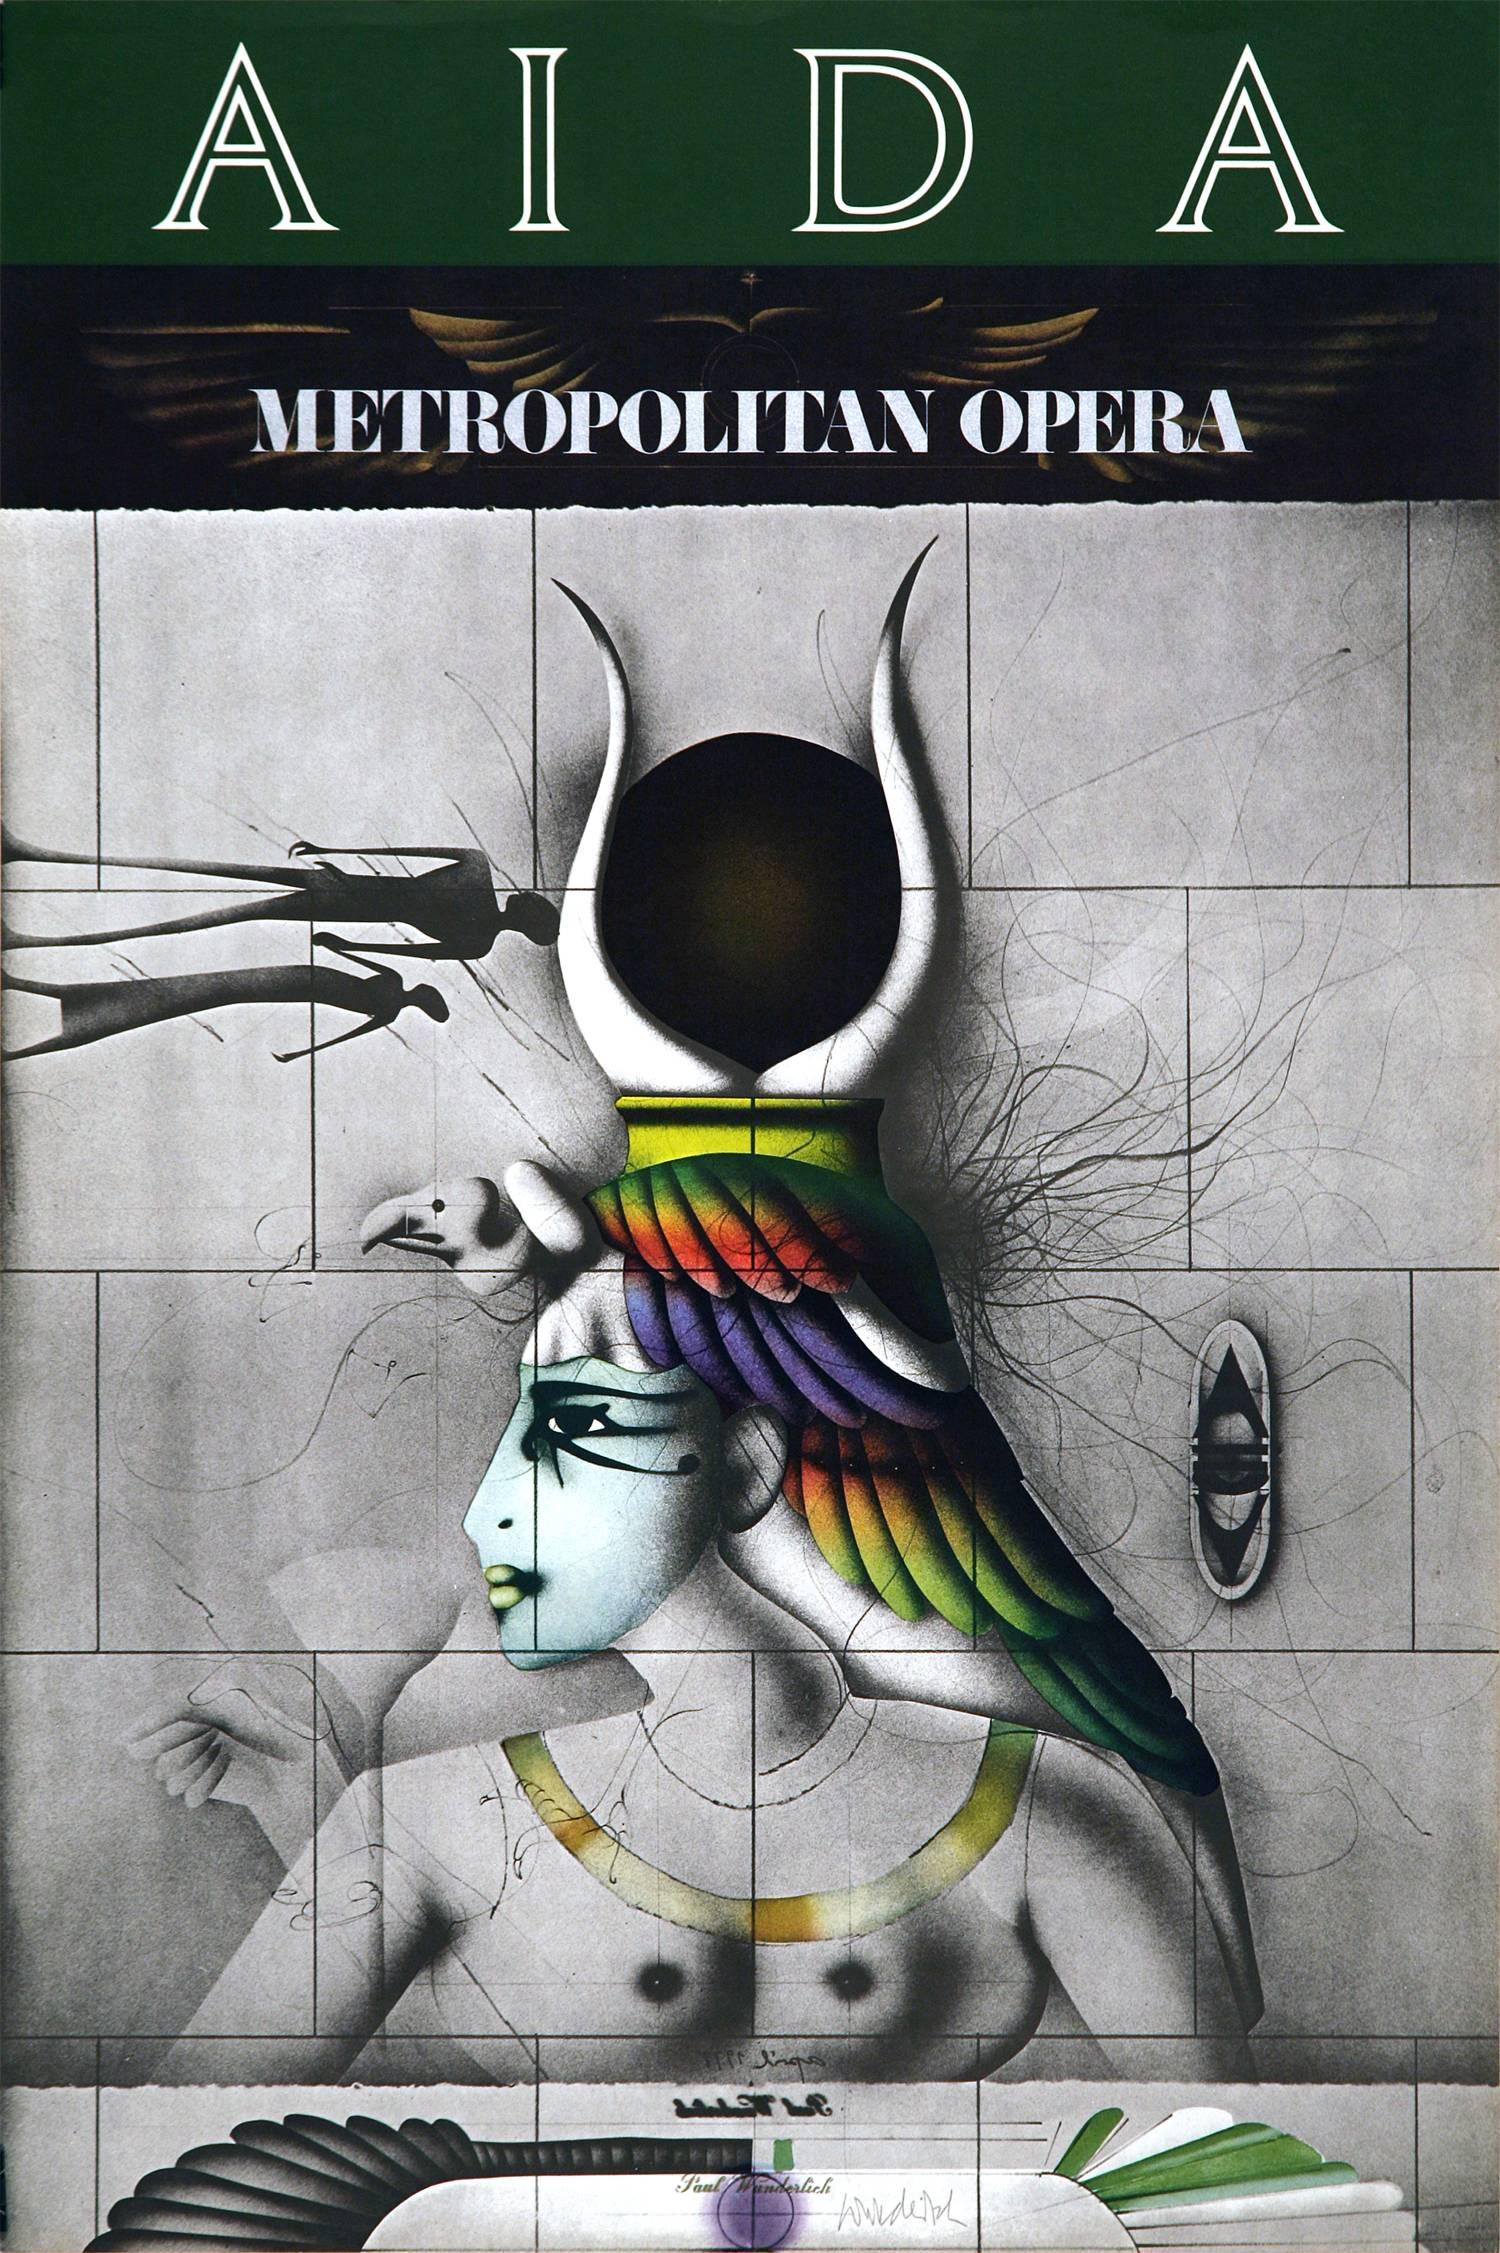 Paul Wunderlich Figurative Print - Aida Met Opera Poster